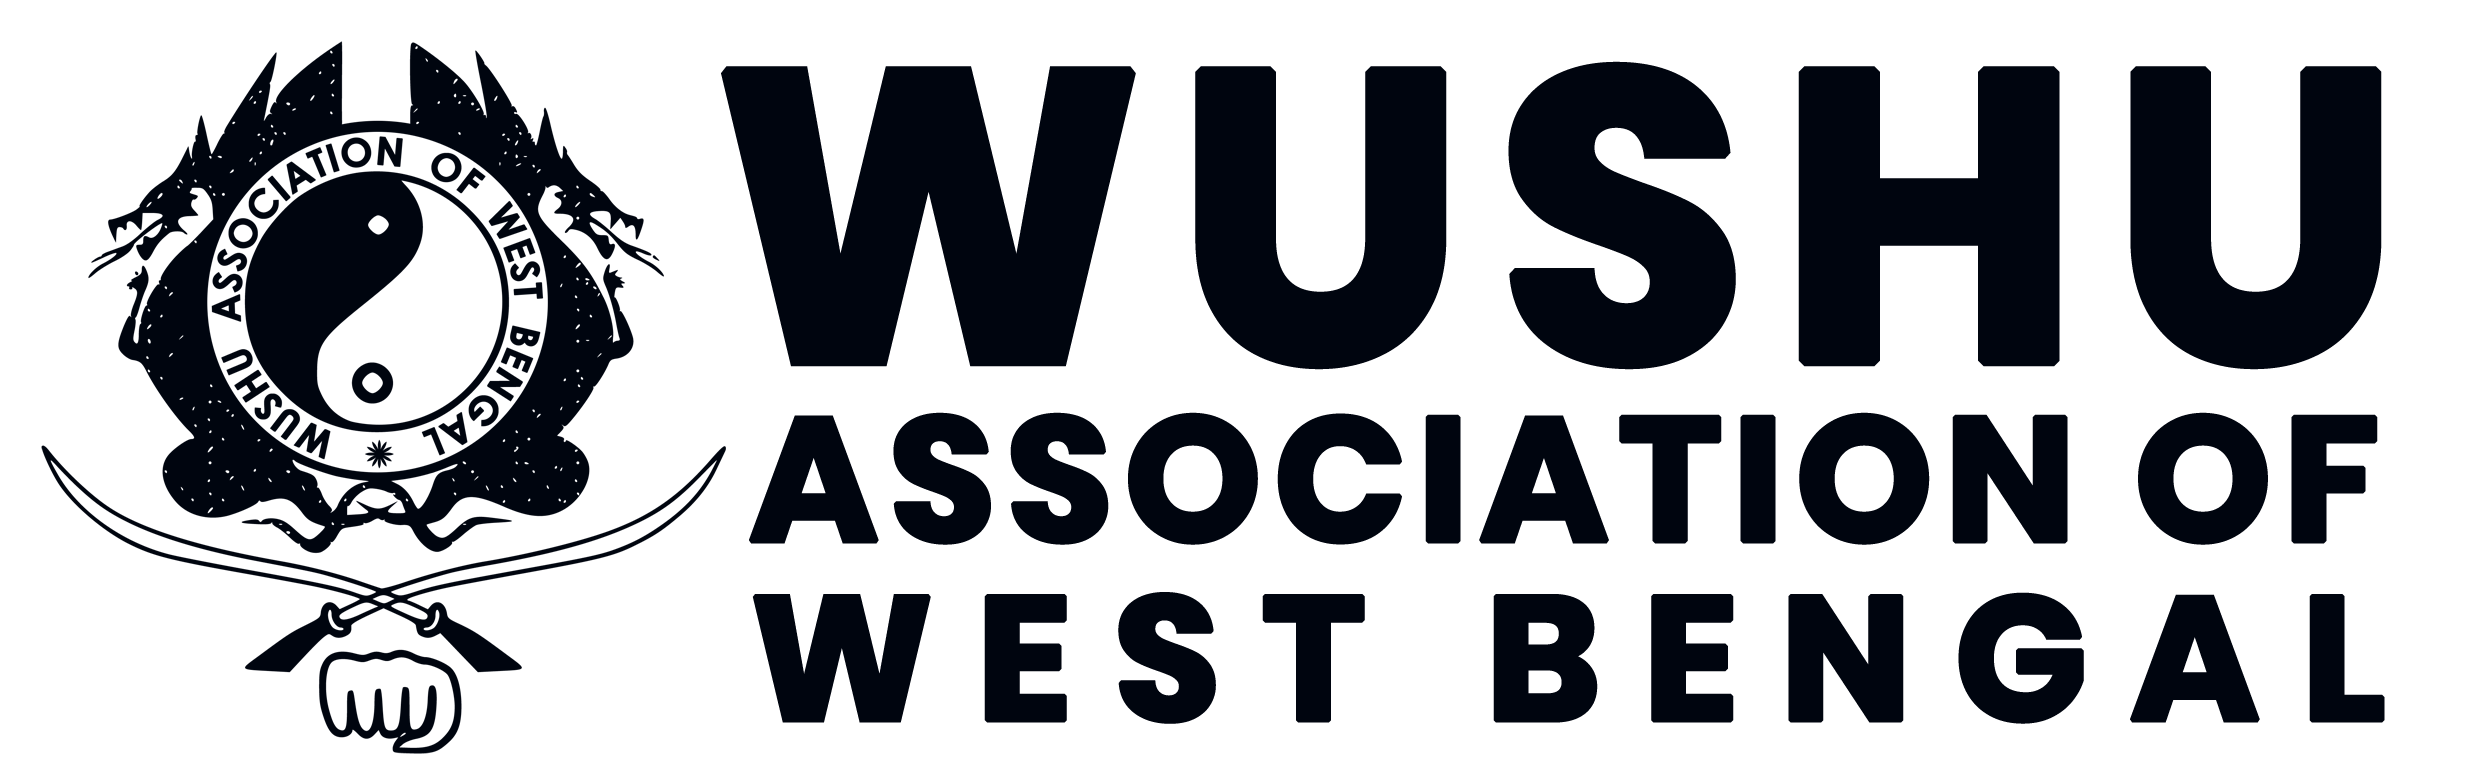 Wushu Association of West Bengal Logo